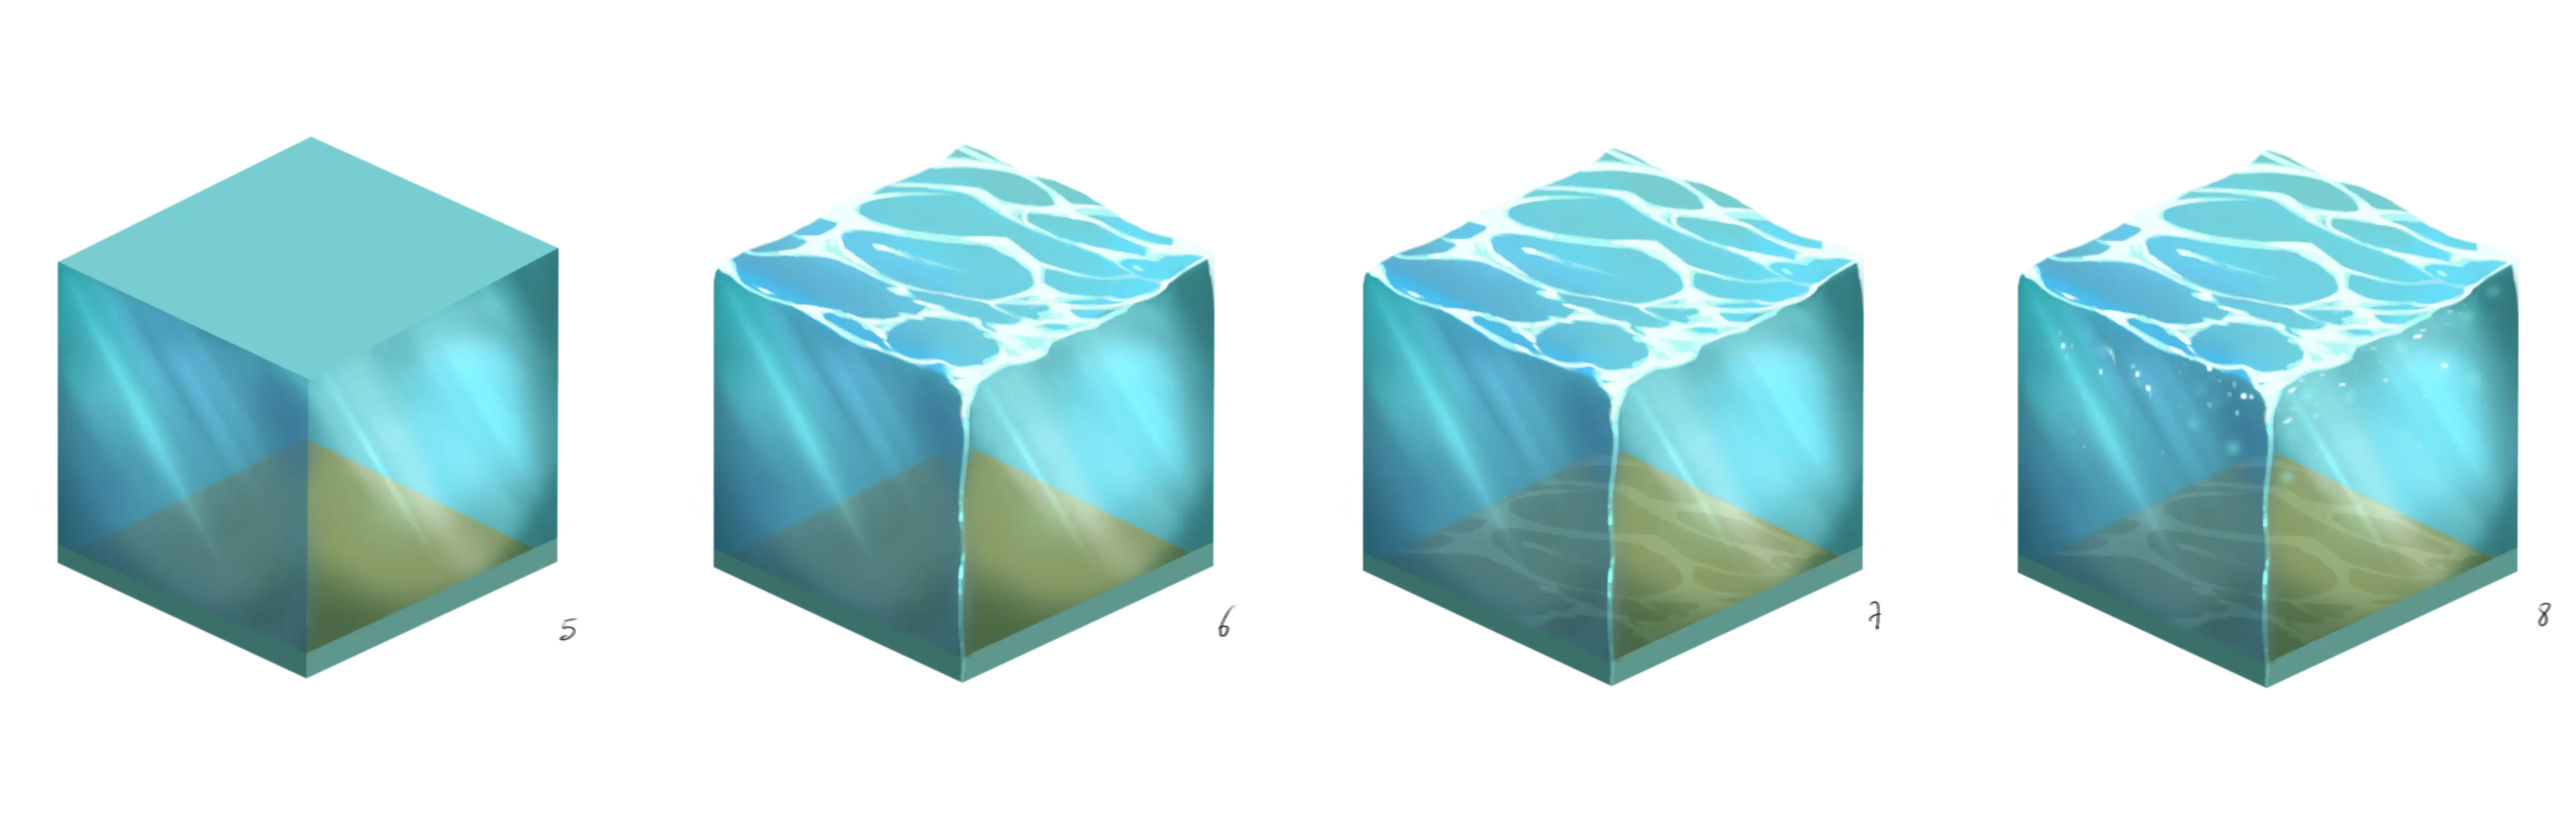 dessiner un cube d’eau